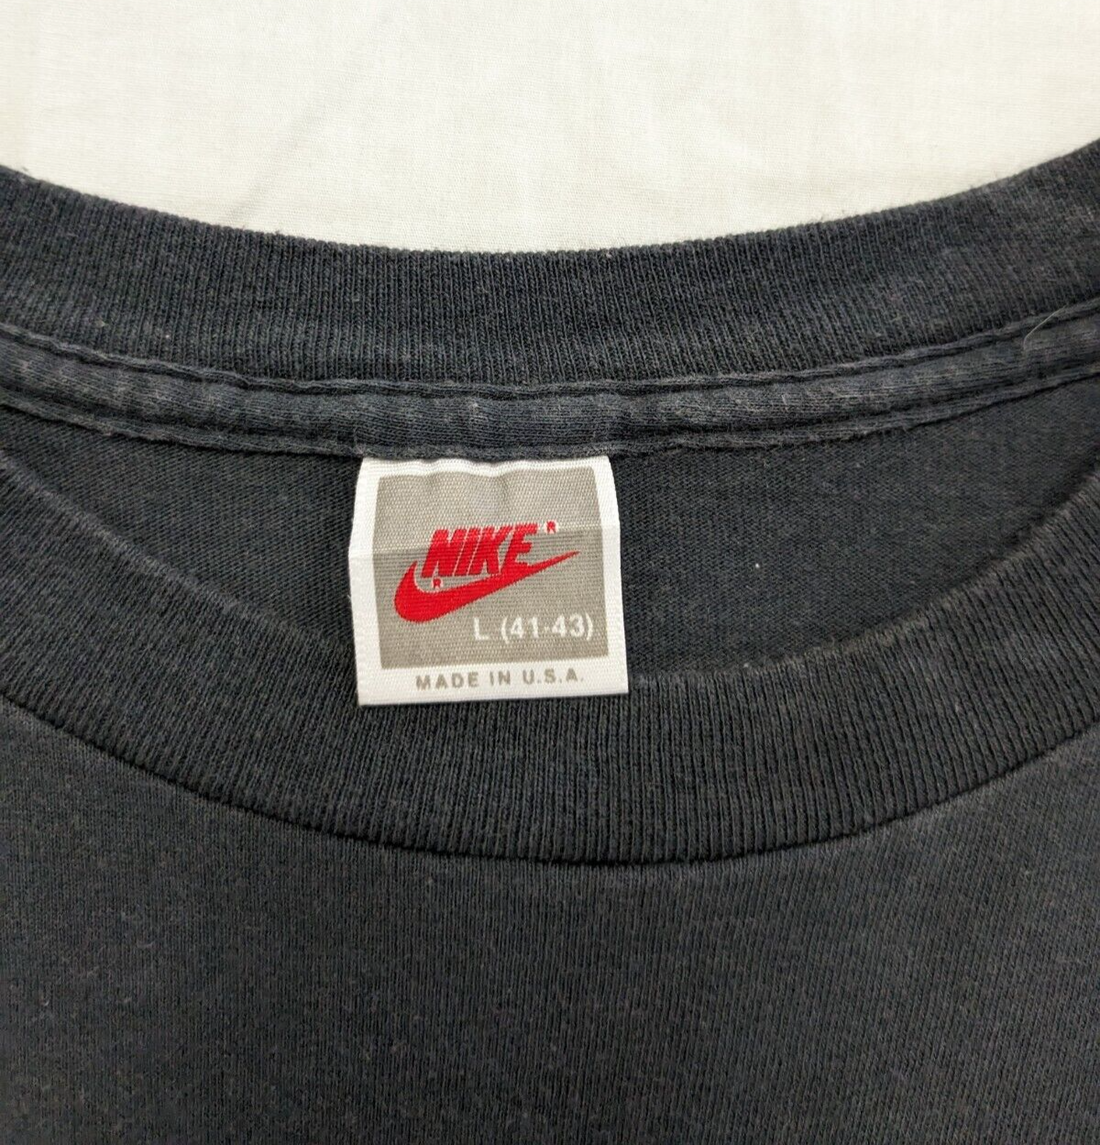 Vintage 8 Mile Road Race Nike T-Shirt Size Large Black 80s 90s